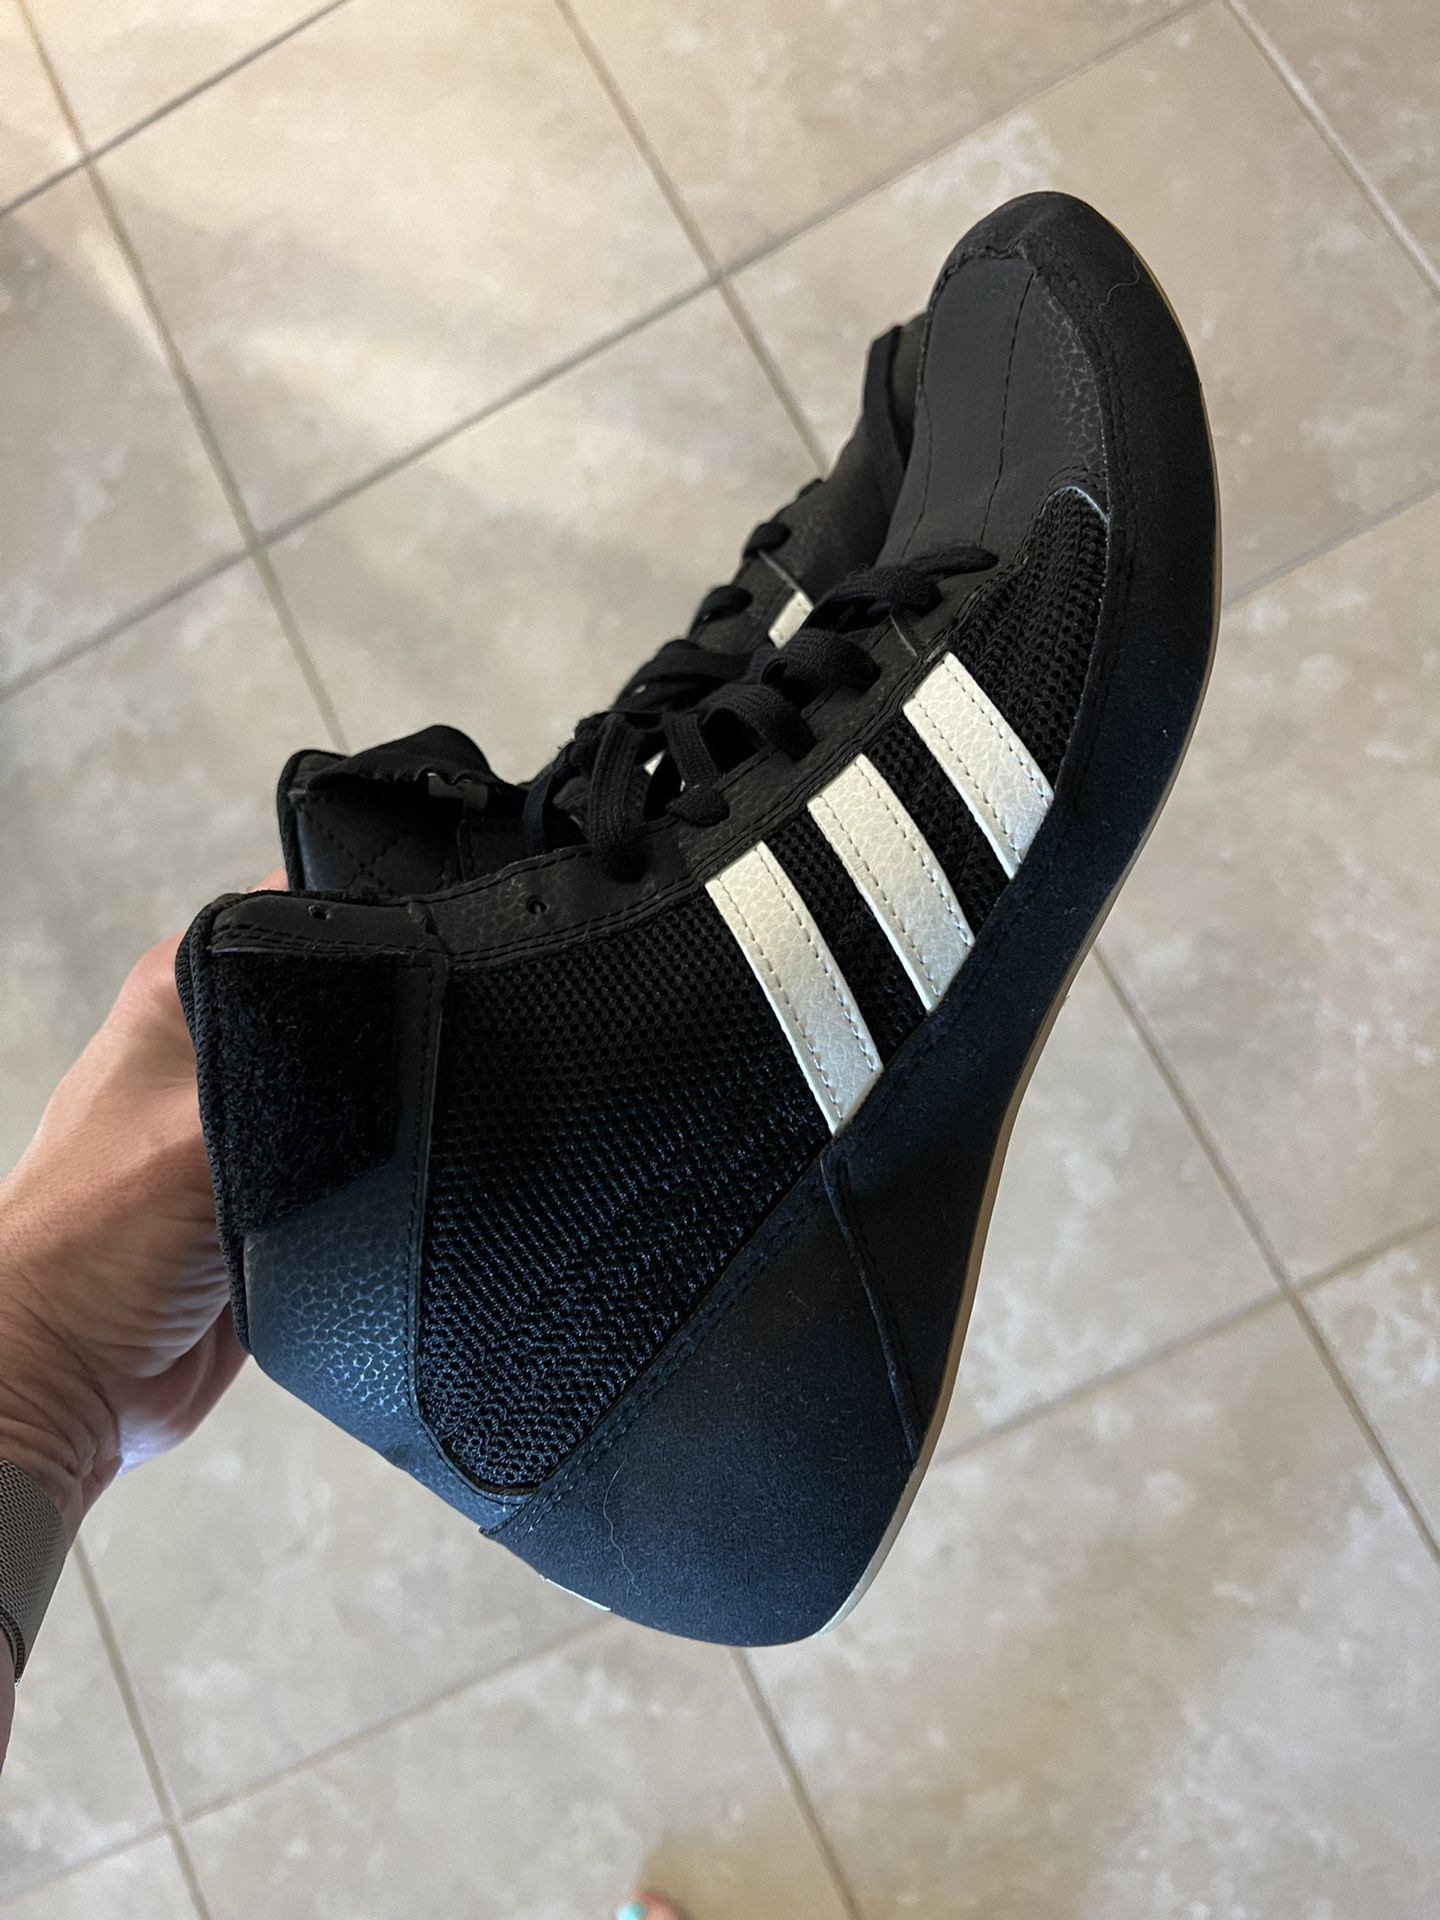 Men’s Sz 10 Wrestling Shoes Adidas 